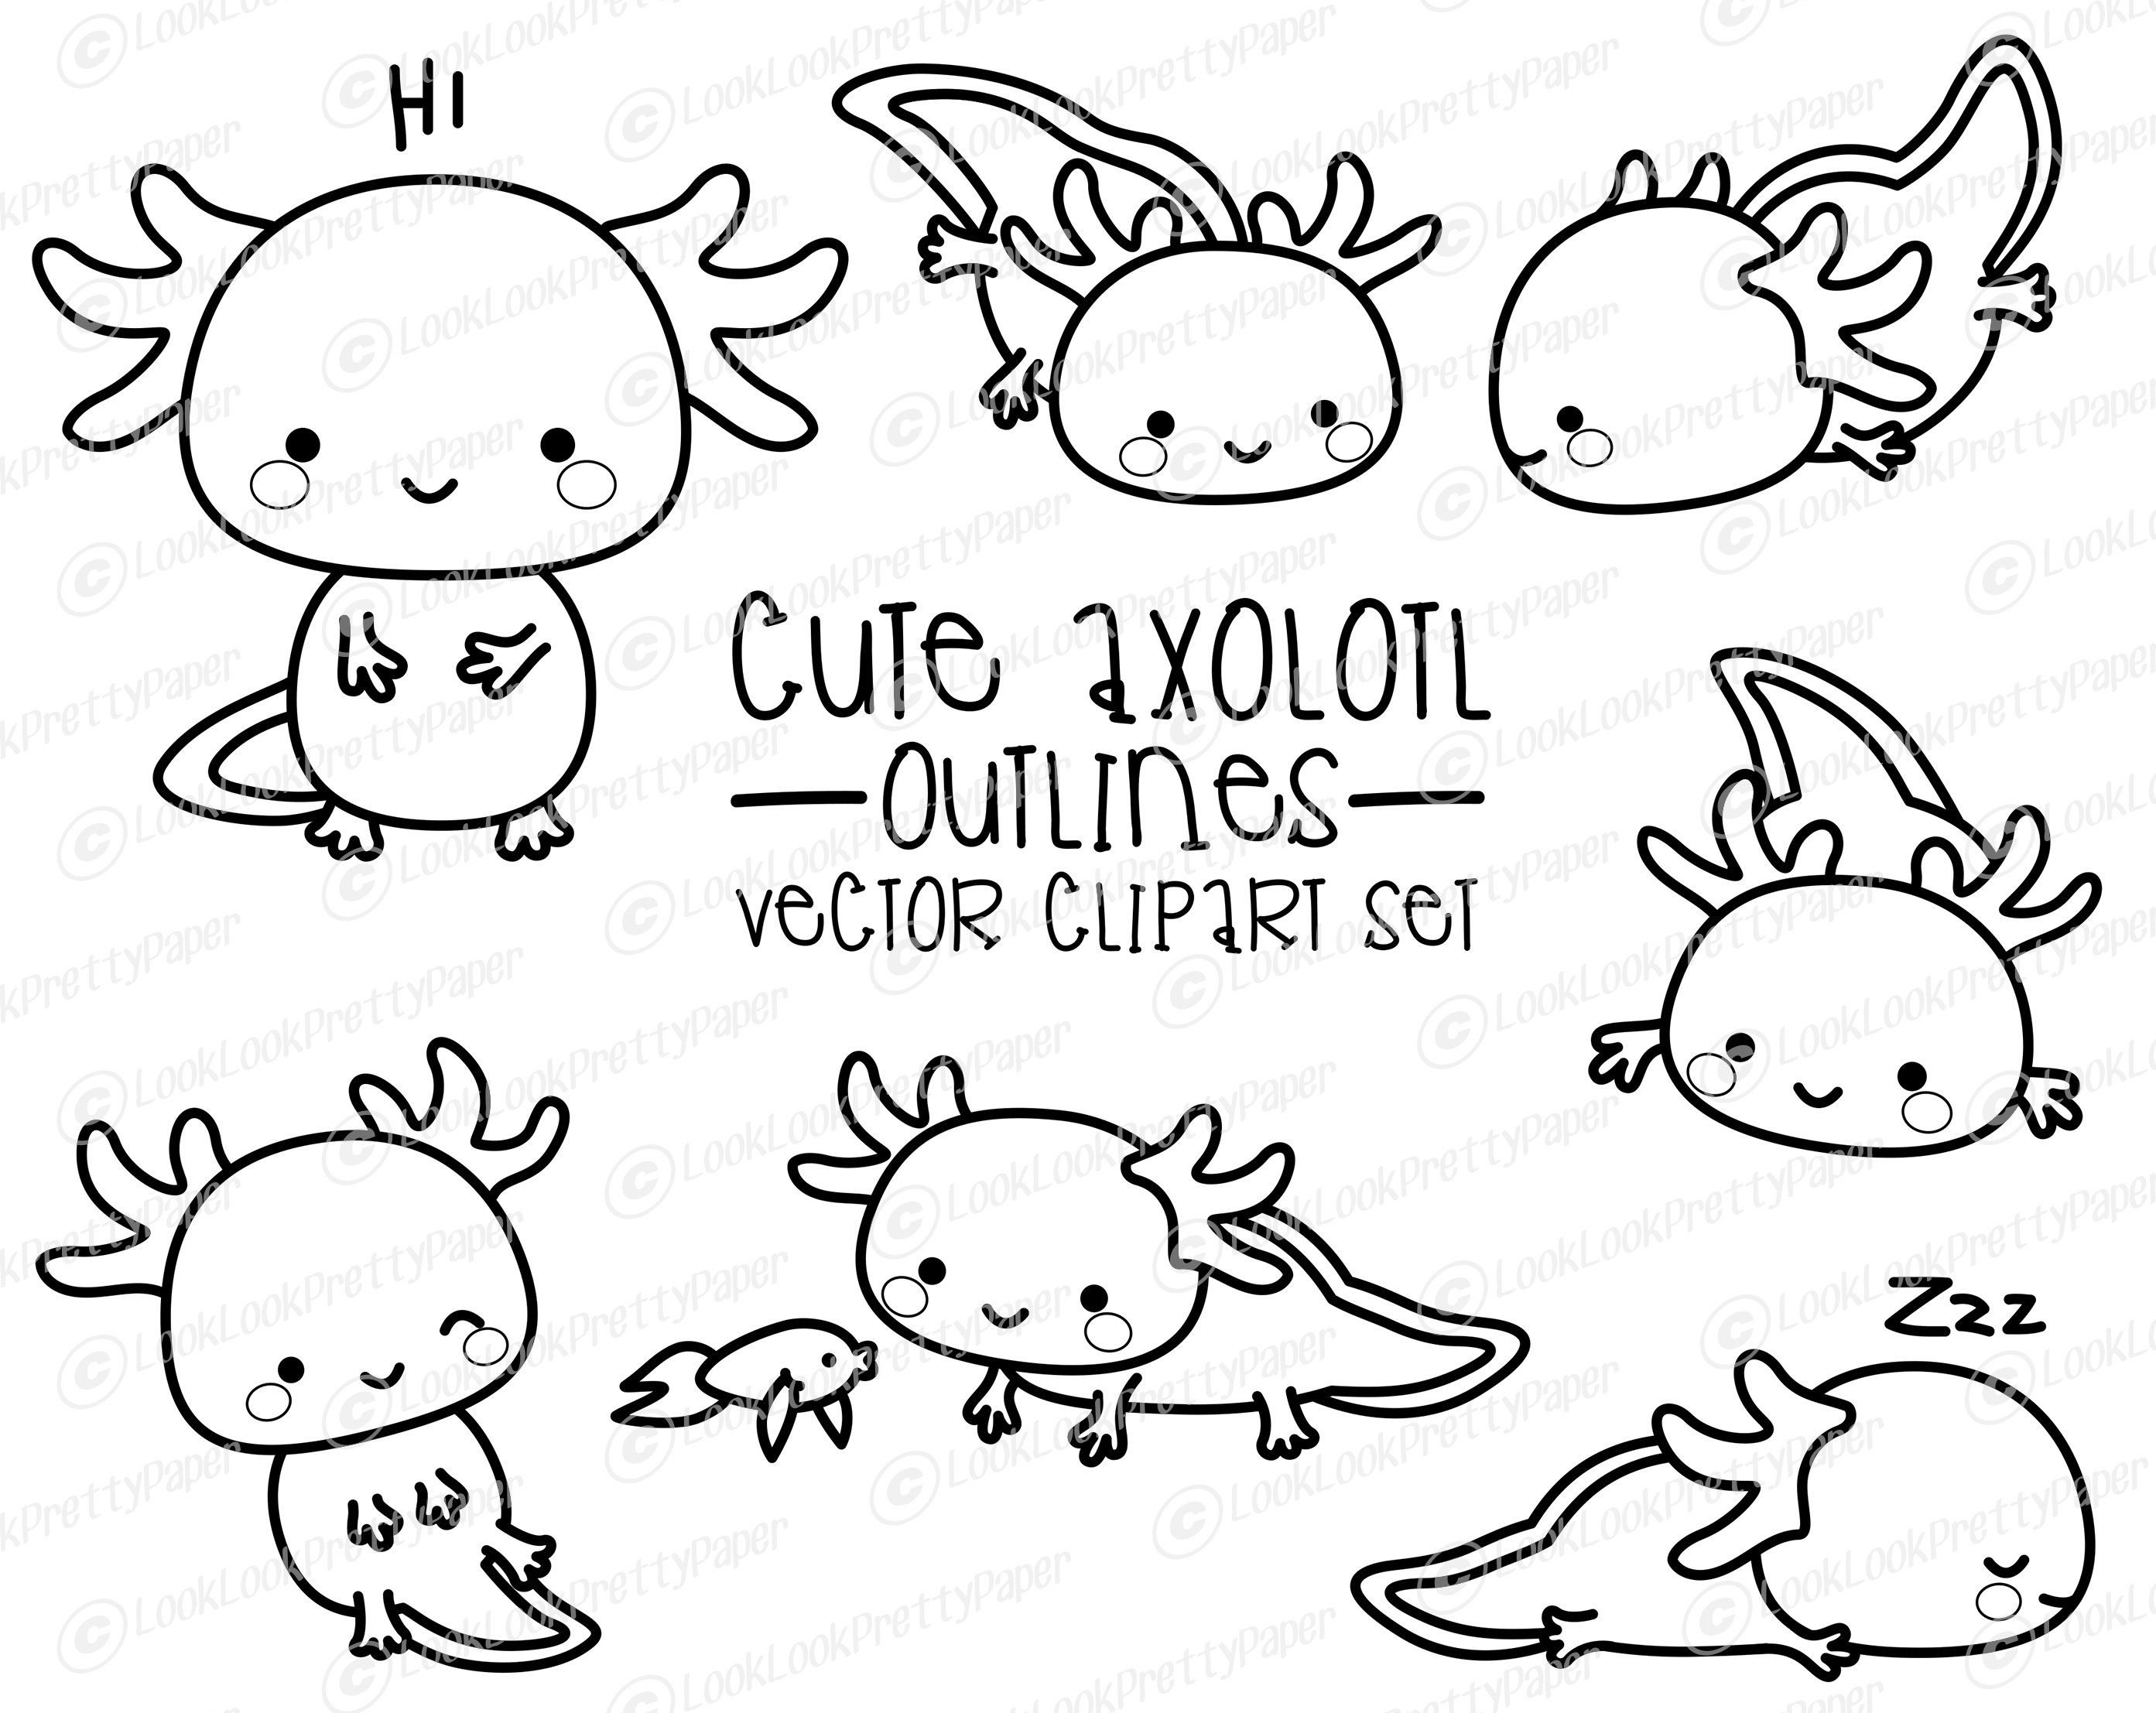 Magic axolotl coloring book